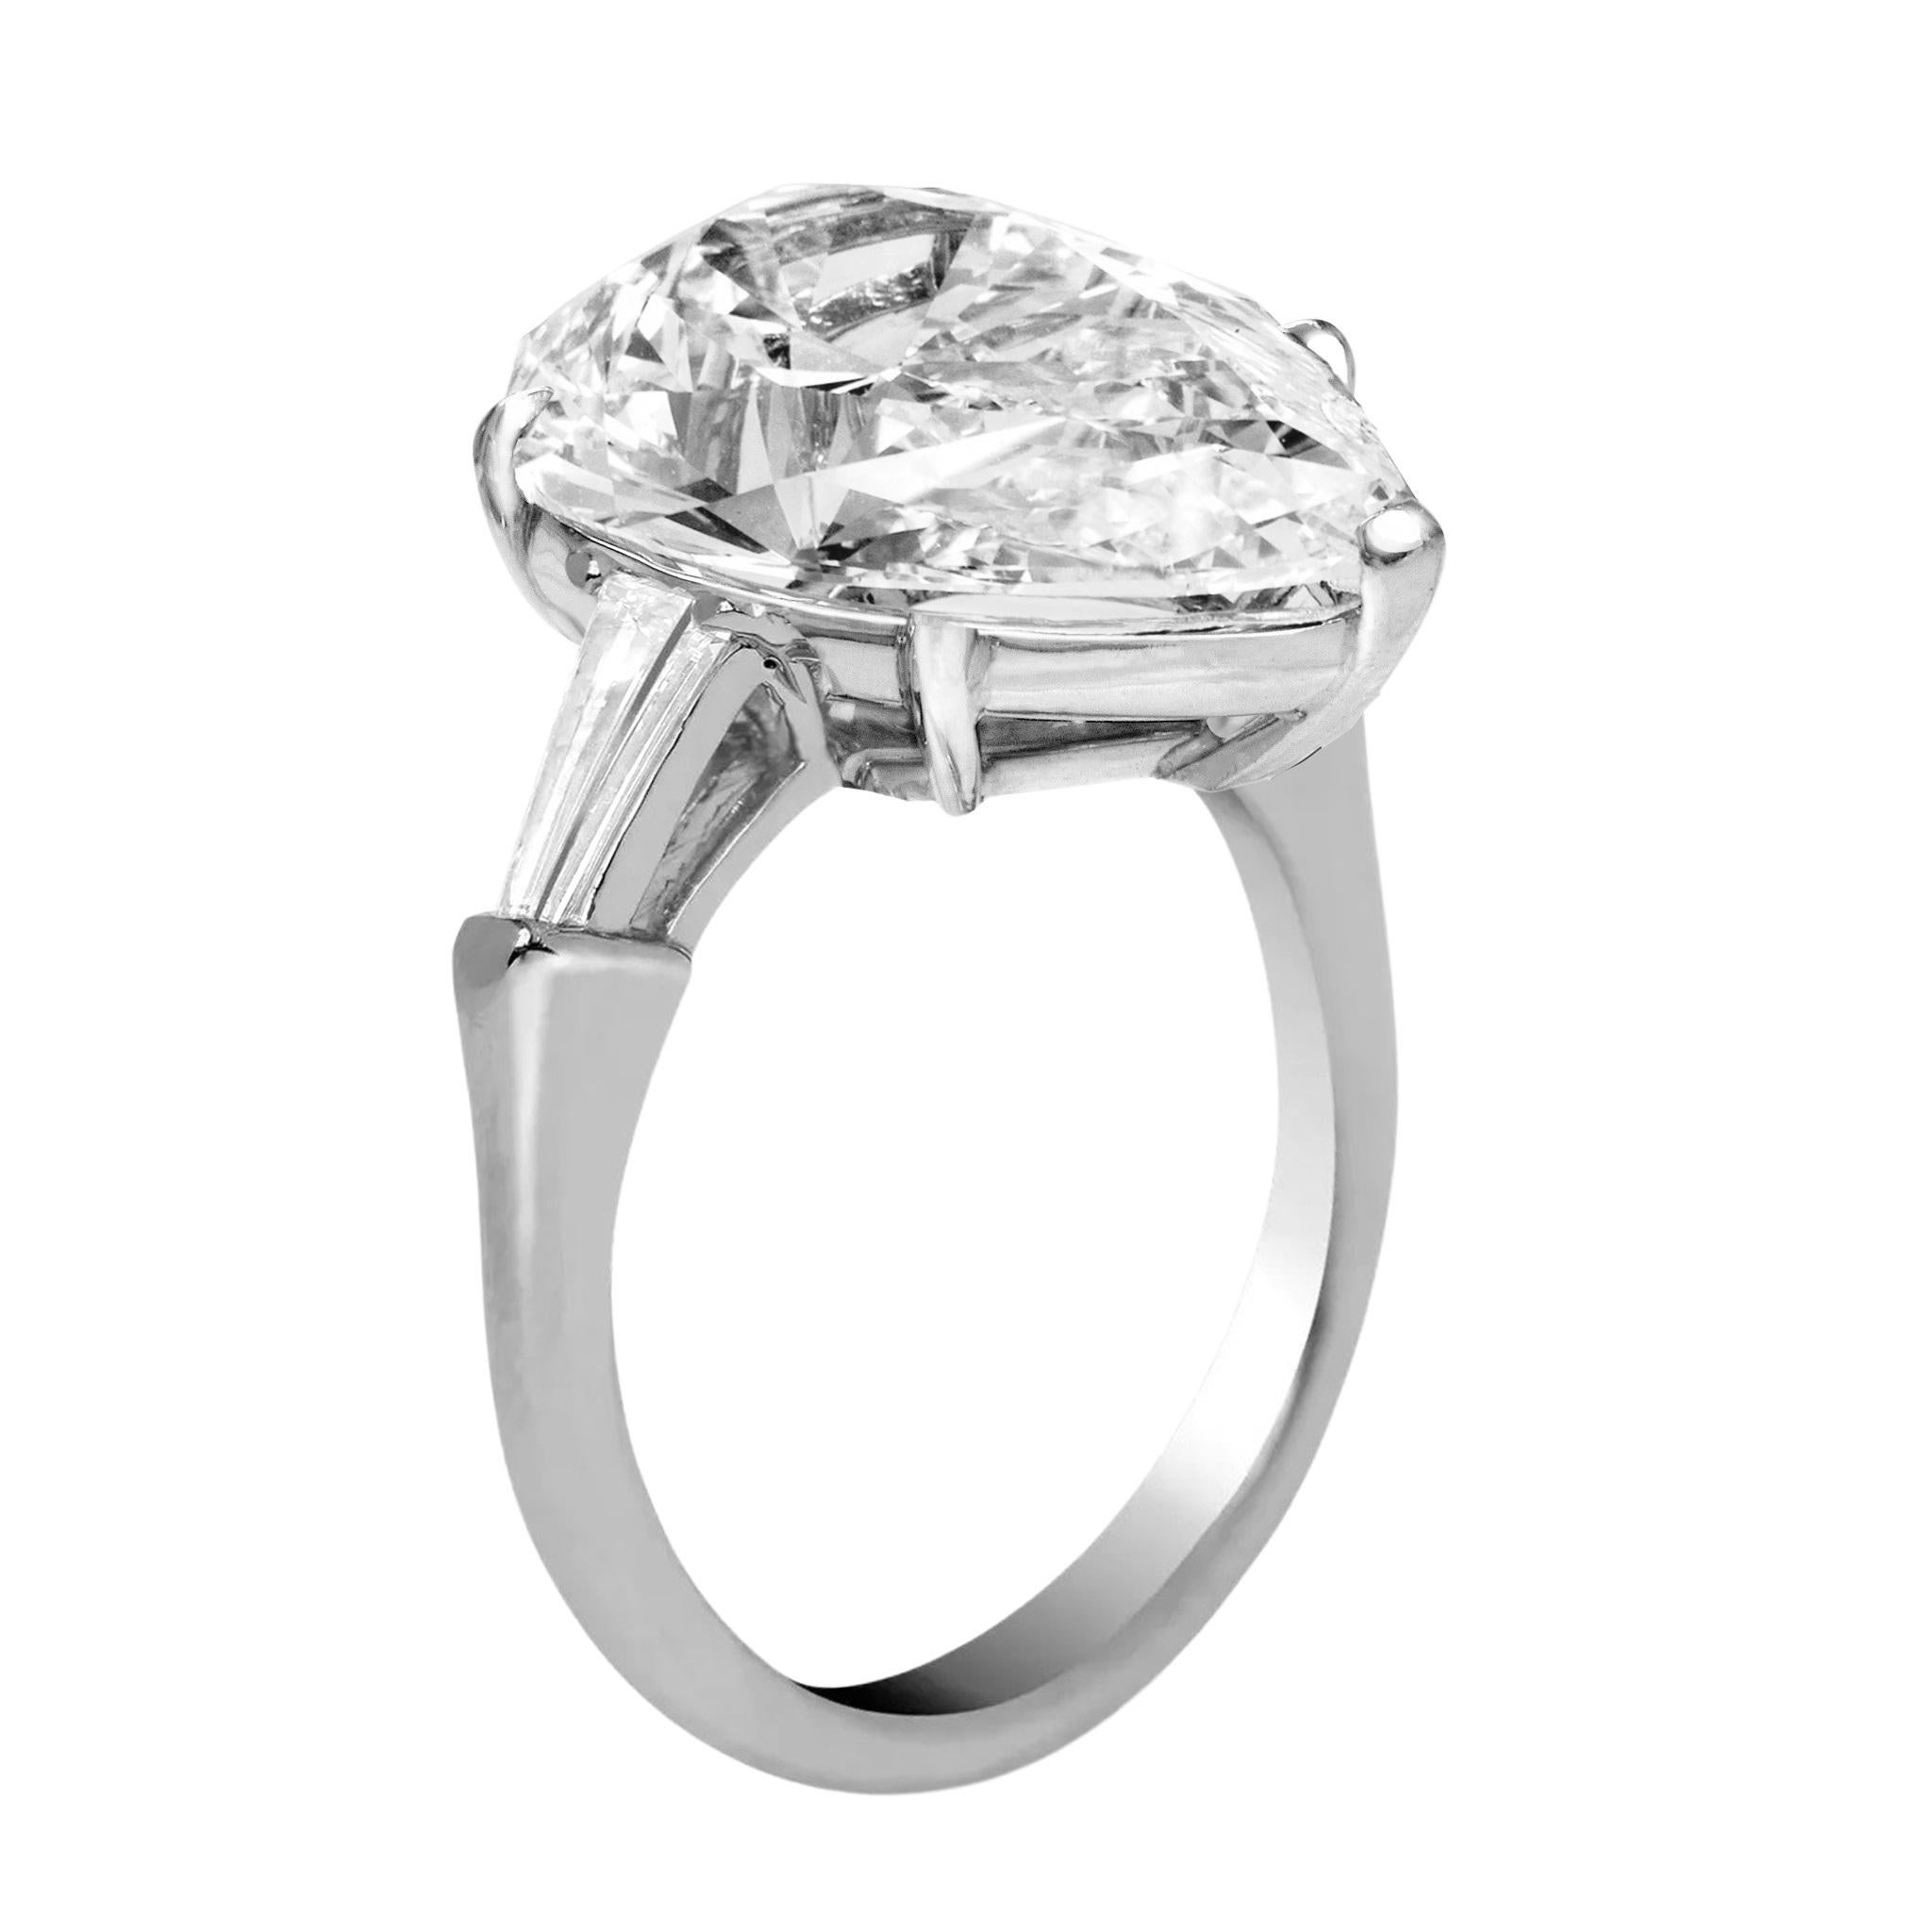 4 carat pear diamond ring